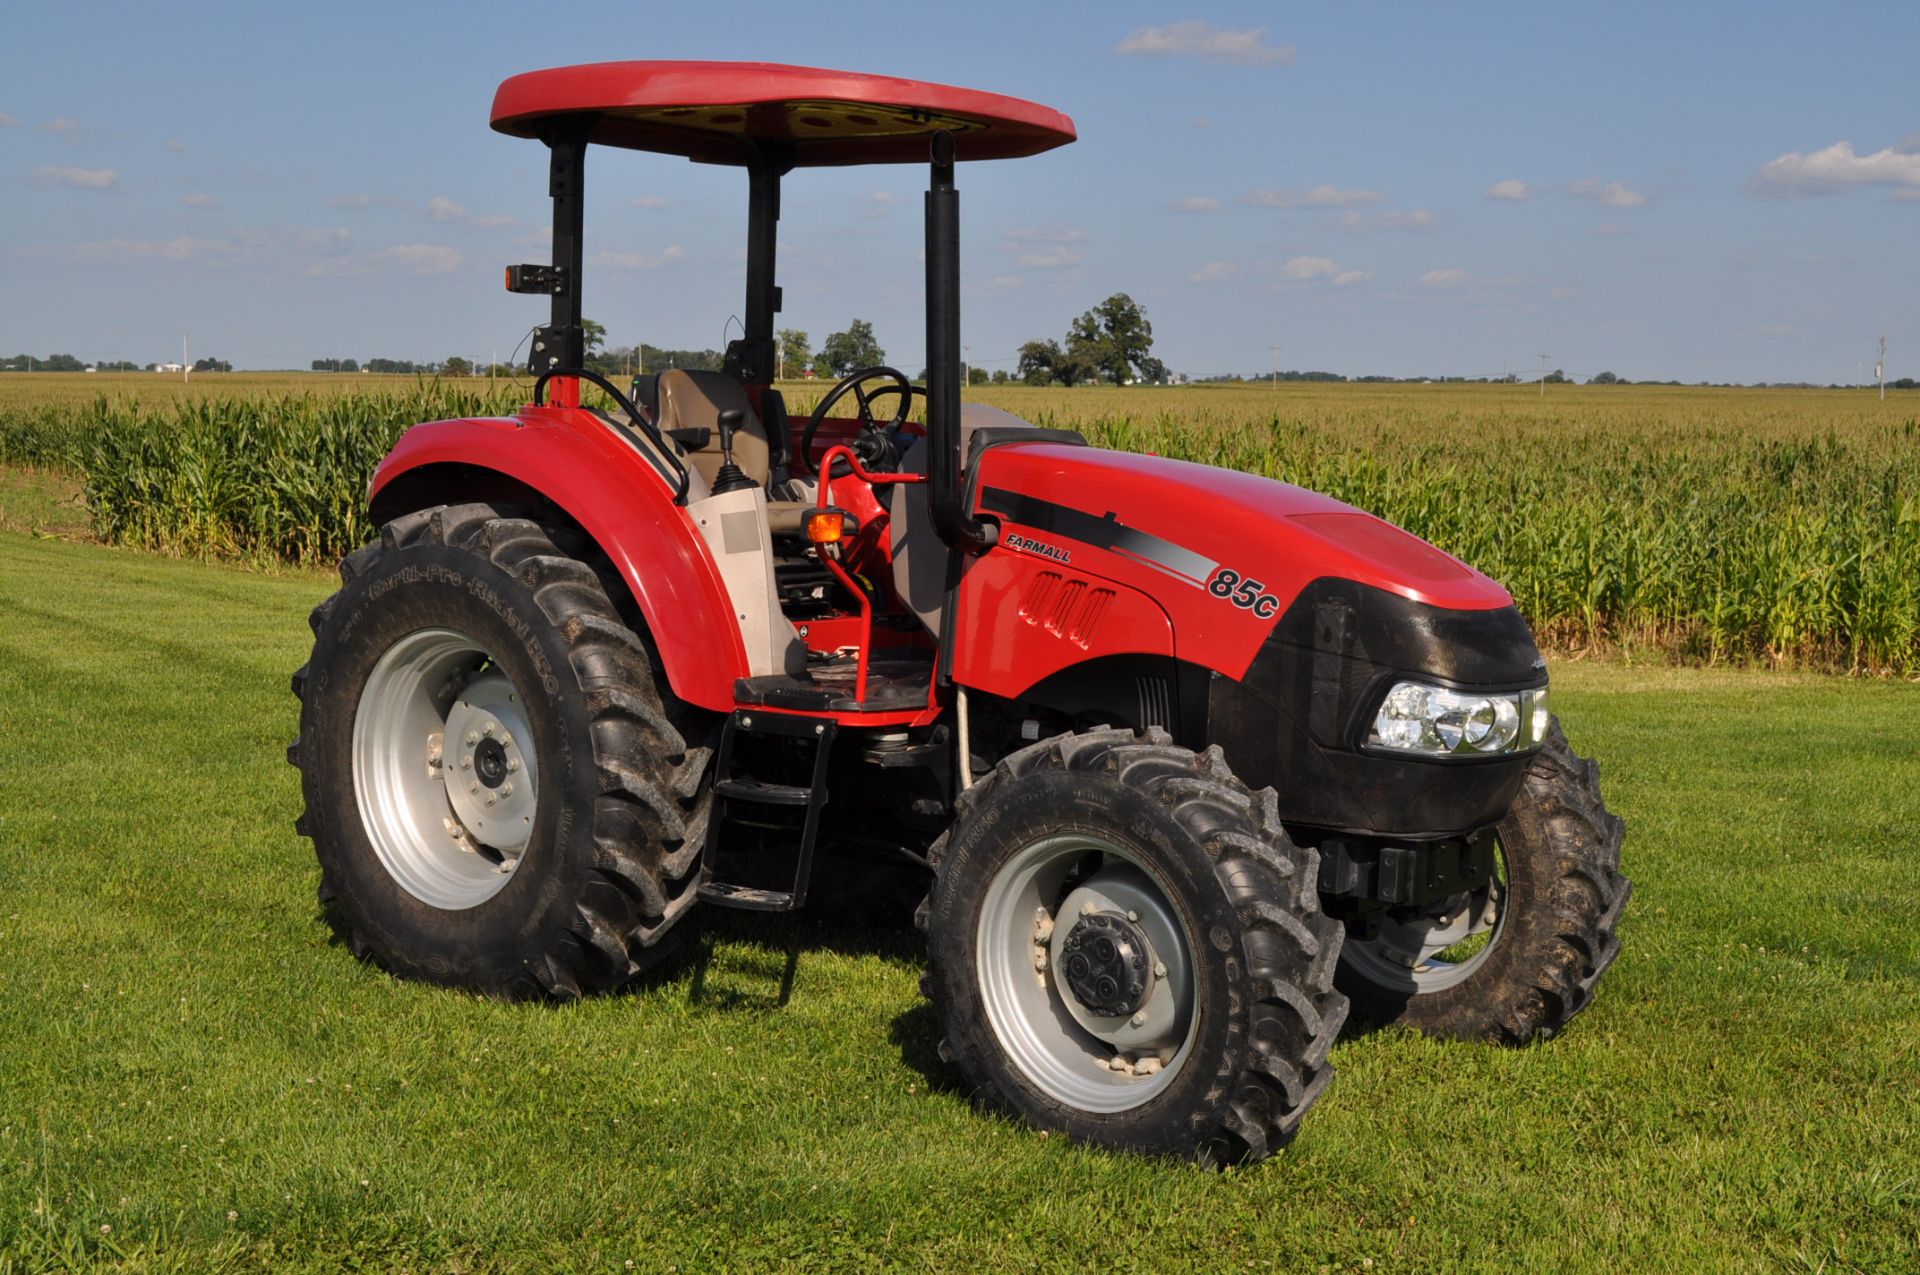 Case IH 85c Farmall tractor, MFWD, 460/85R30 rear, 320/85R24 front, 1 hyd rem, 540 PTO, 3 pt,